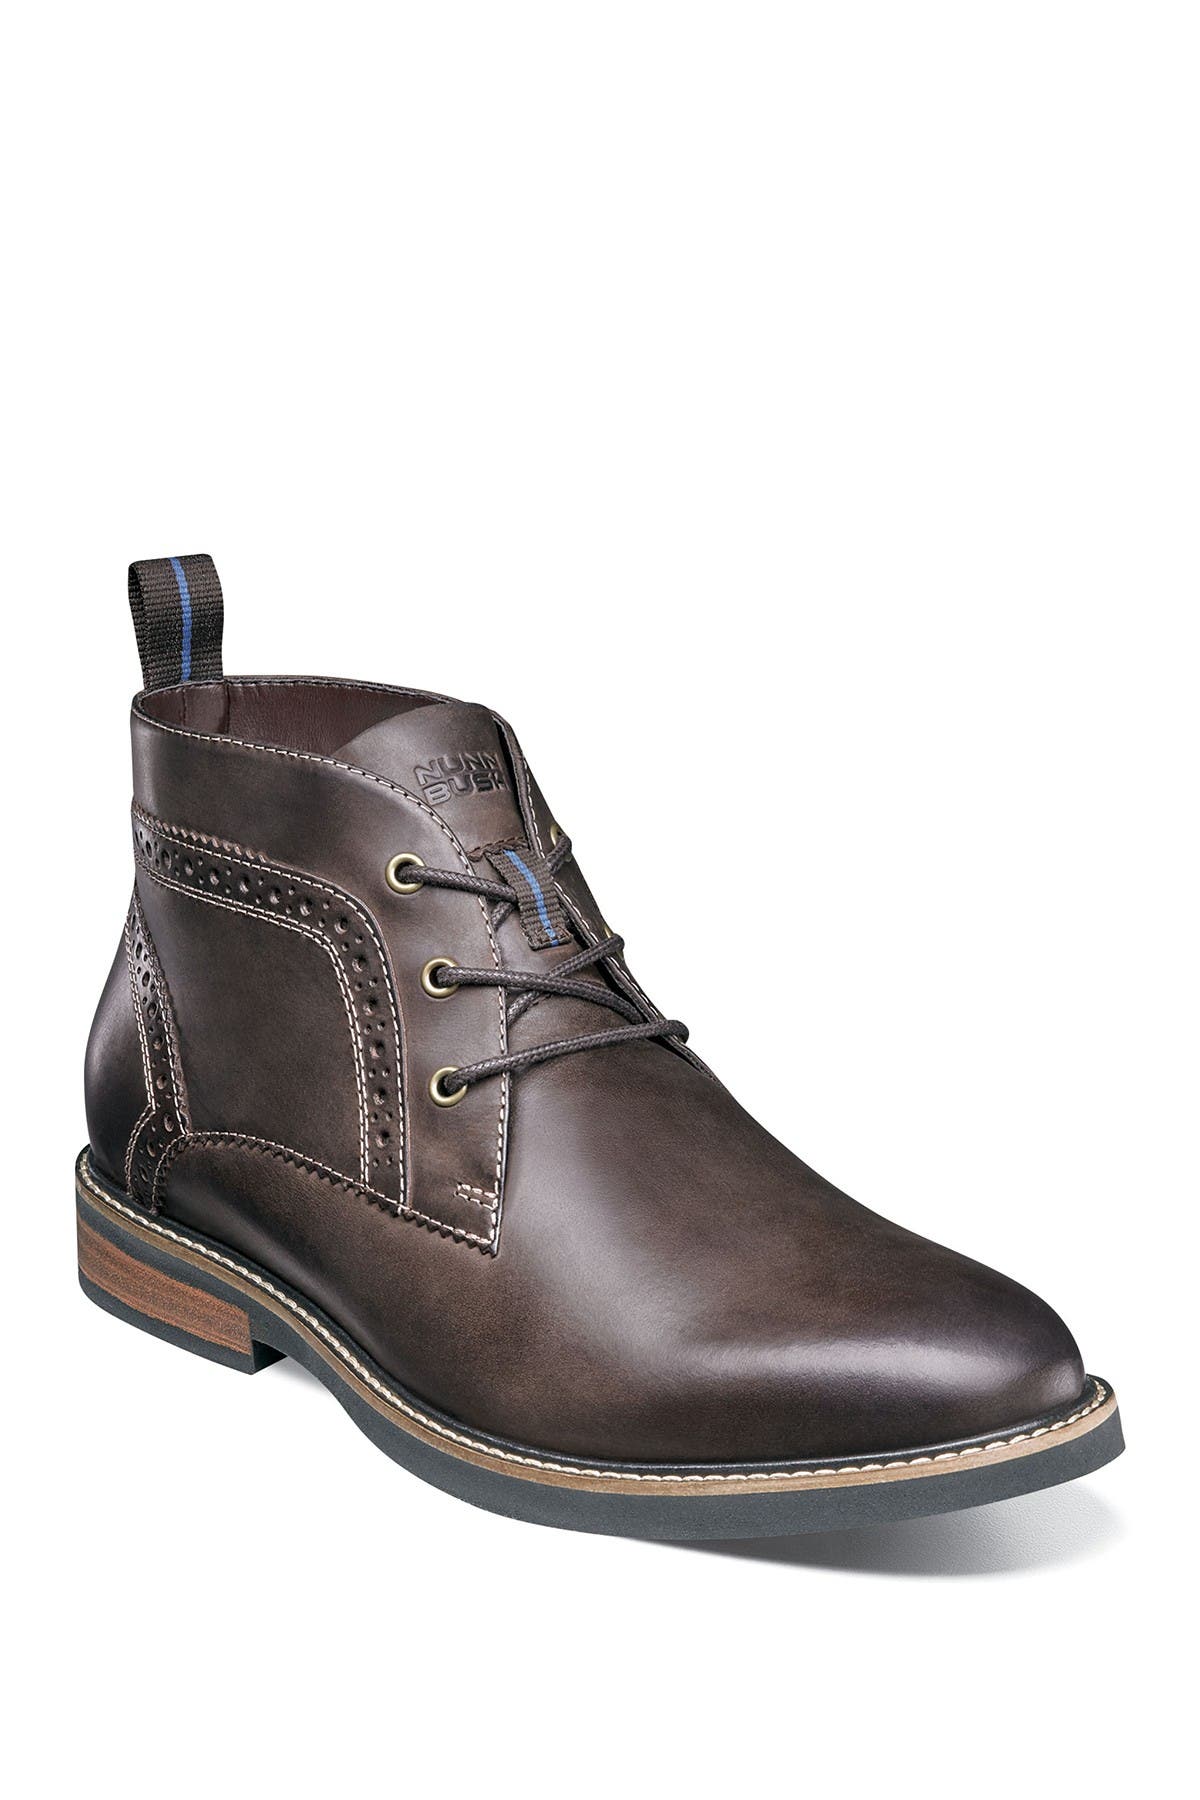 wide width chukka boots